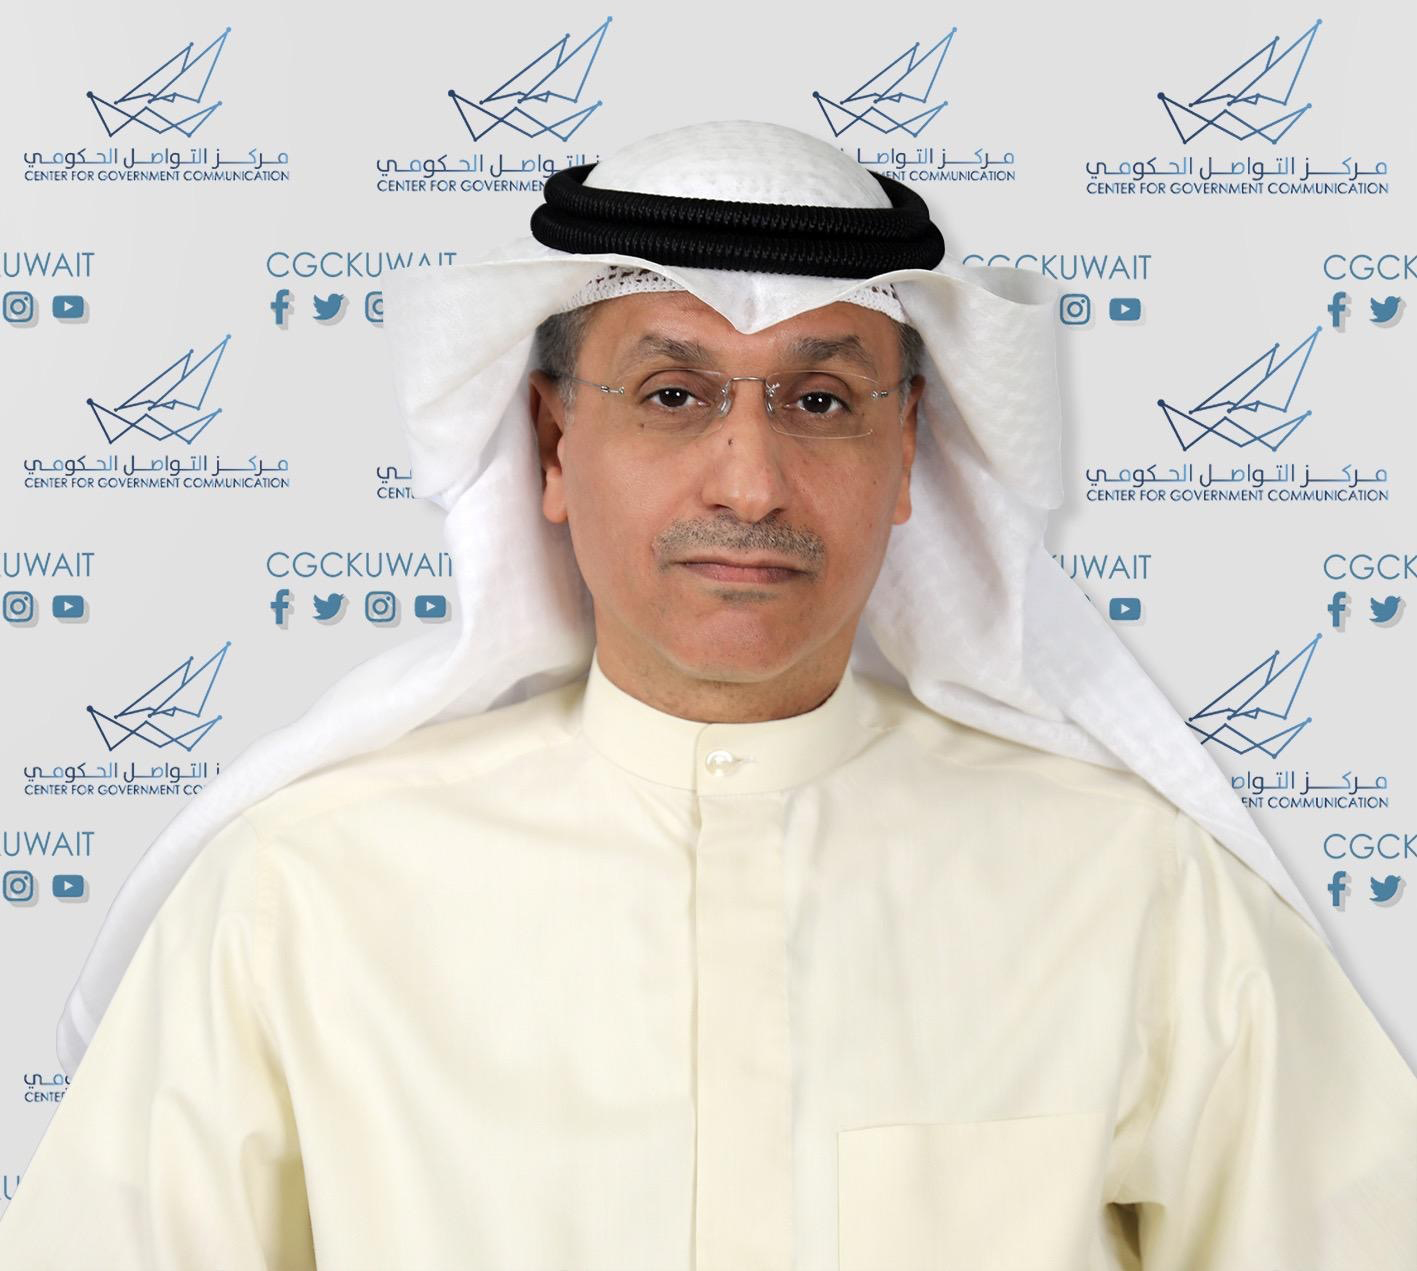 Kuwaiti Government Communication Center Chairman and Government Spokesman Tareq Al-Mezrem